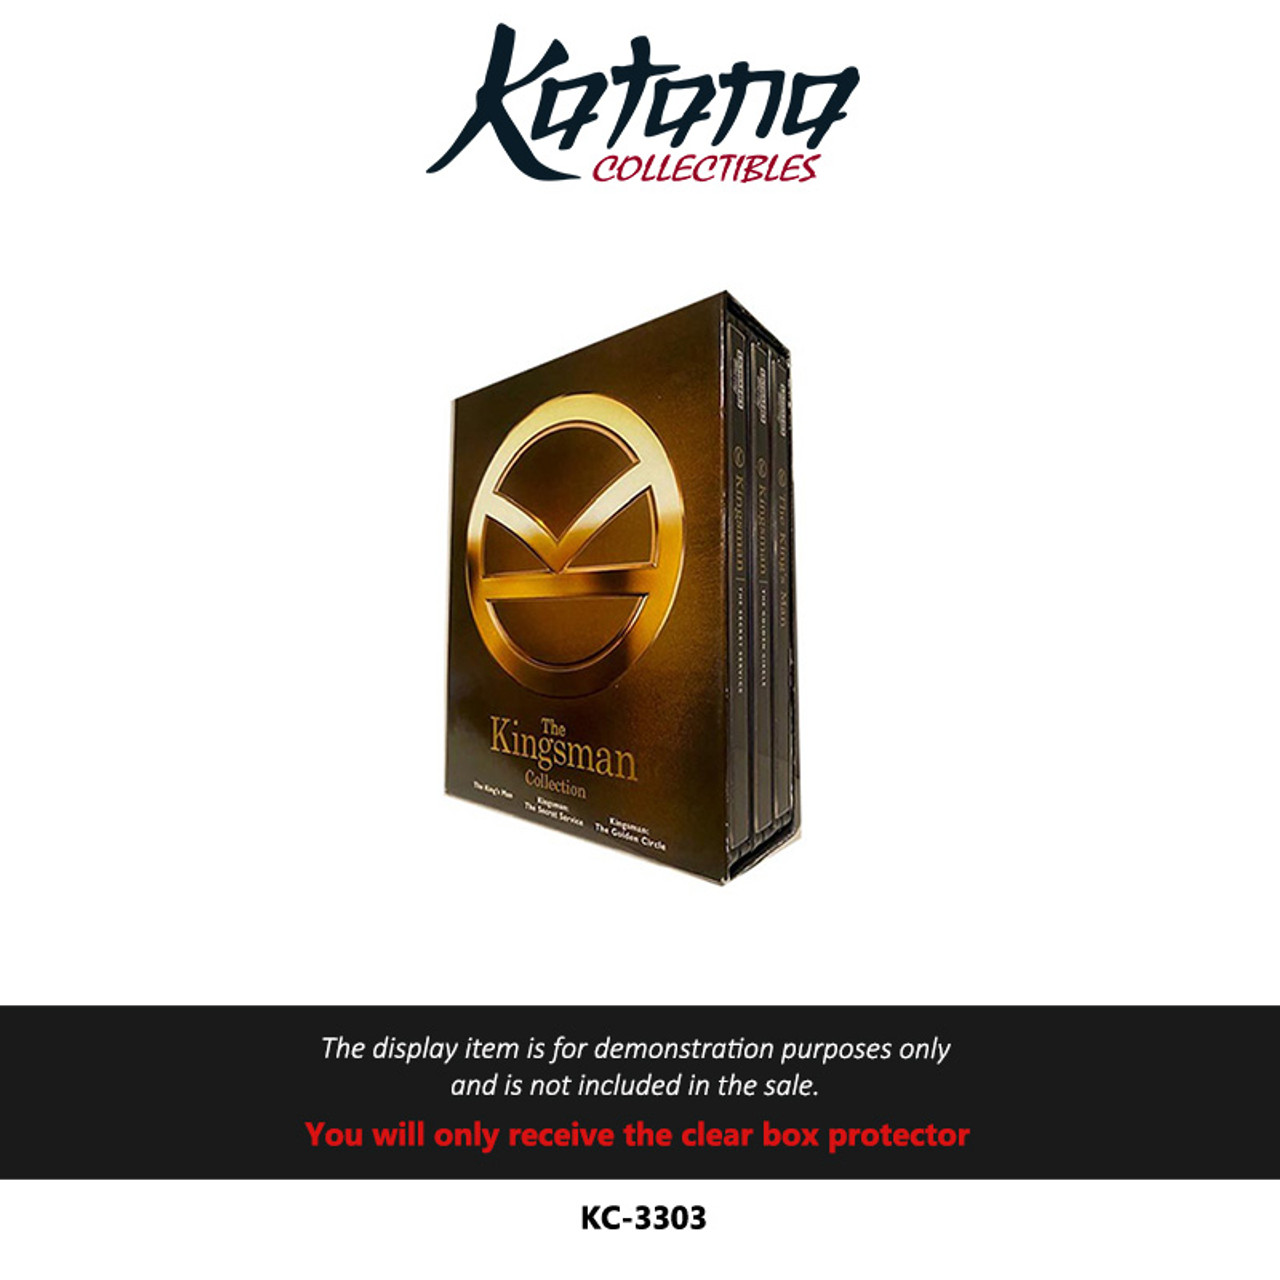 Katana Collectibles Protector For The Kingsman Steelbook Collection